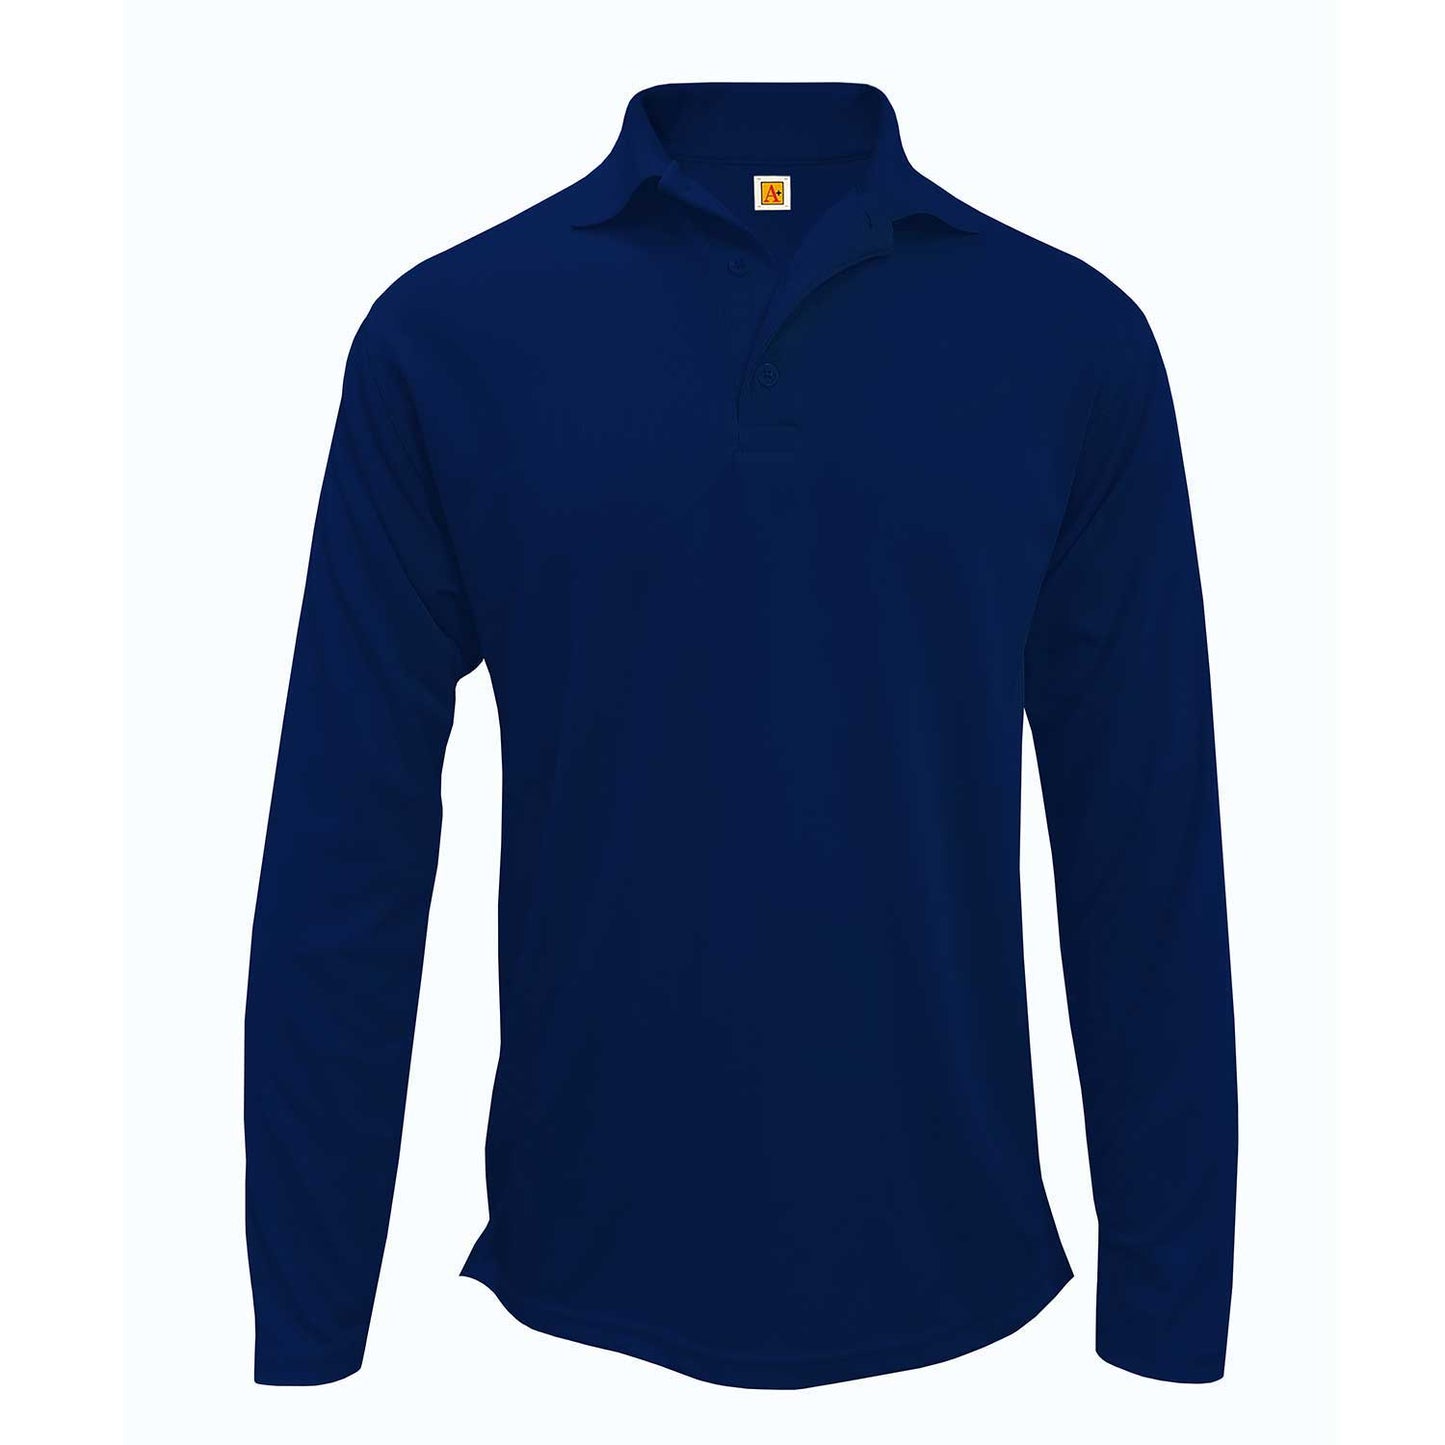 Performance Dri-Fit  Jersey Knit Long Sleeve Shirt (Unisex) w/Logo - 1121